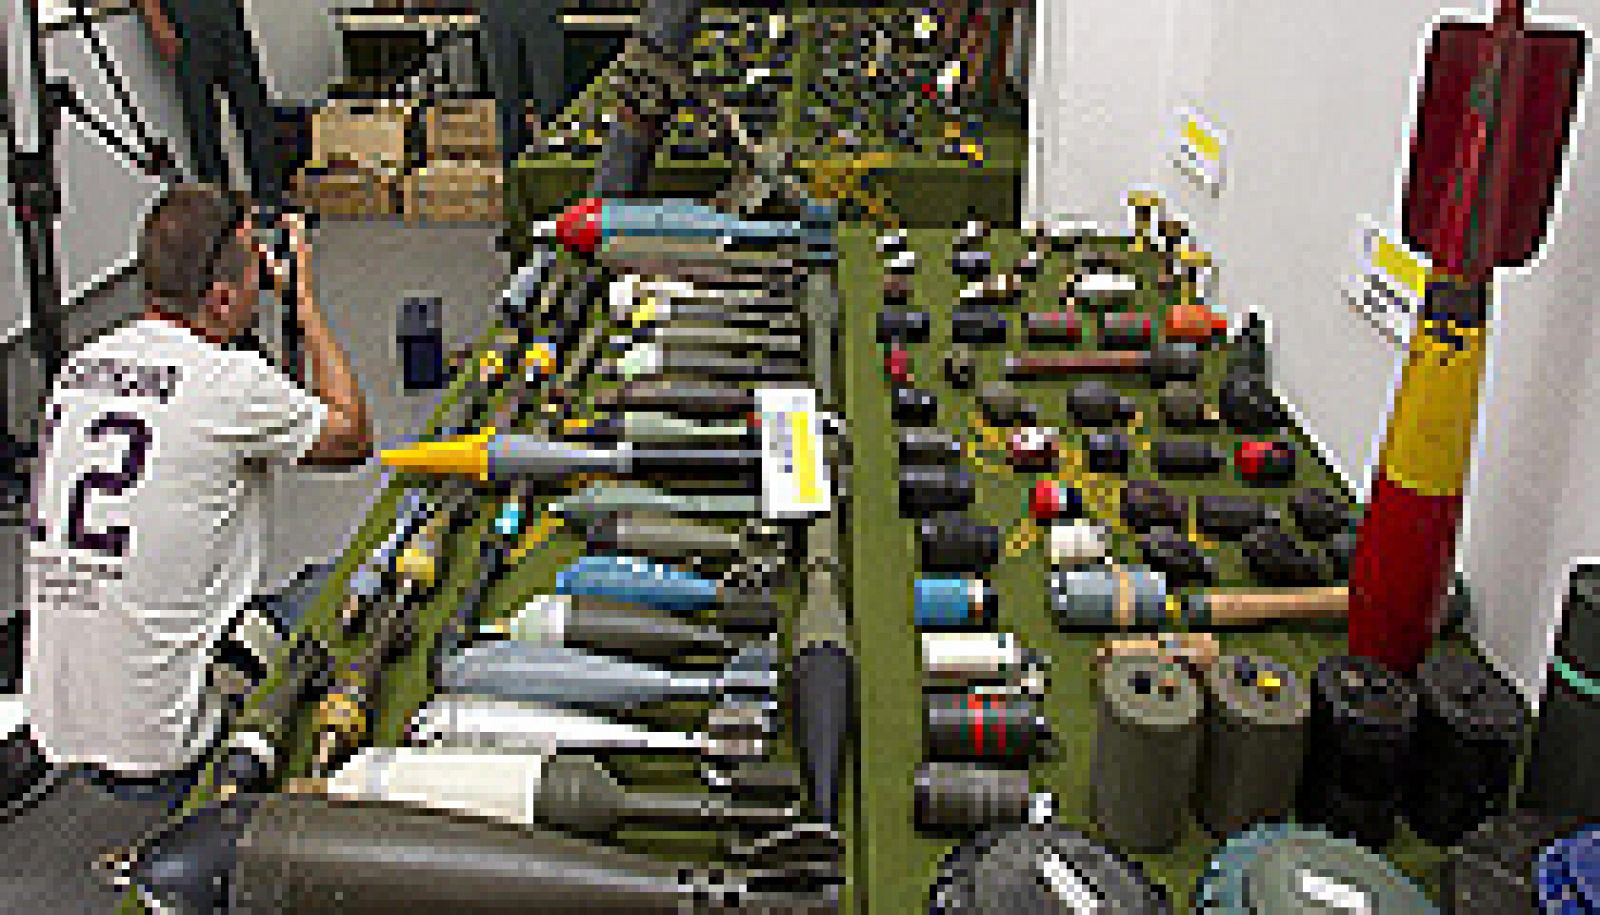  Las autoridades incautan un importante arsenal de armas en Málaga